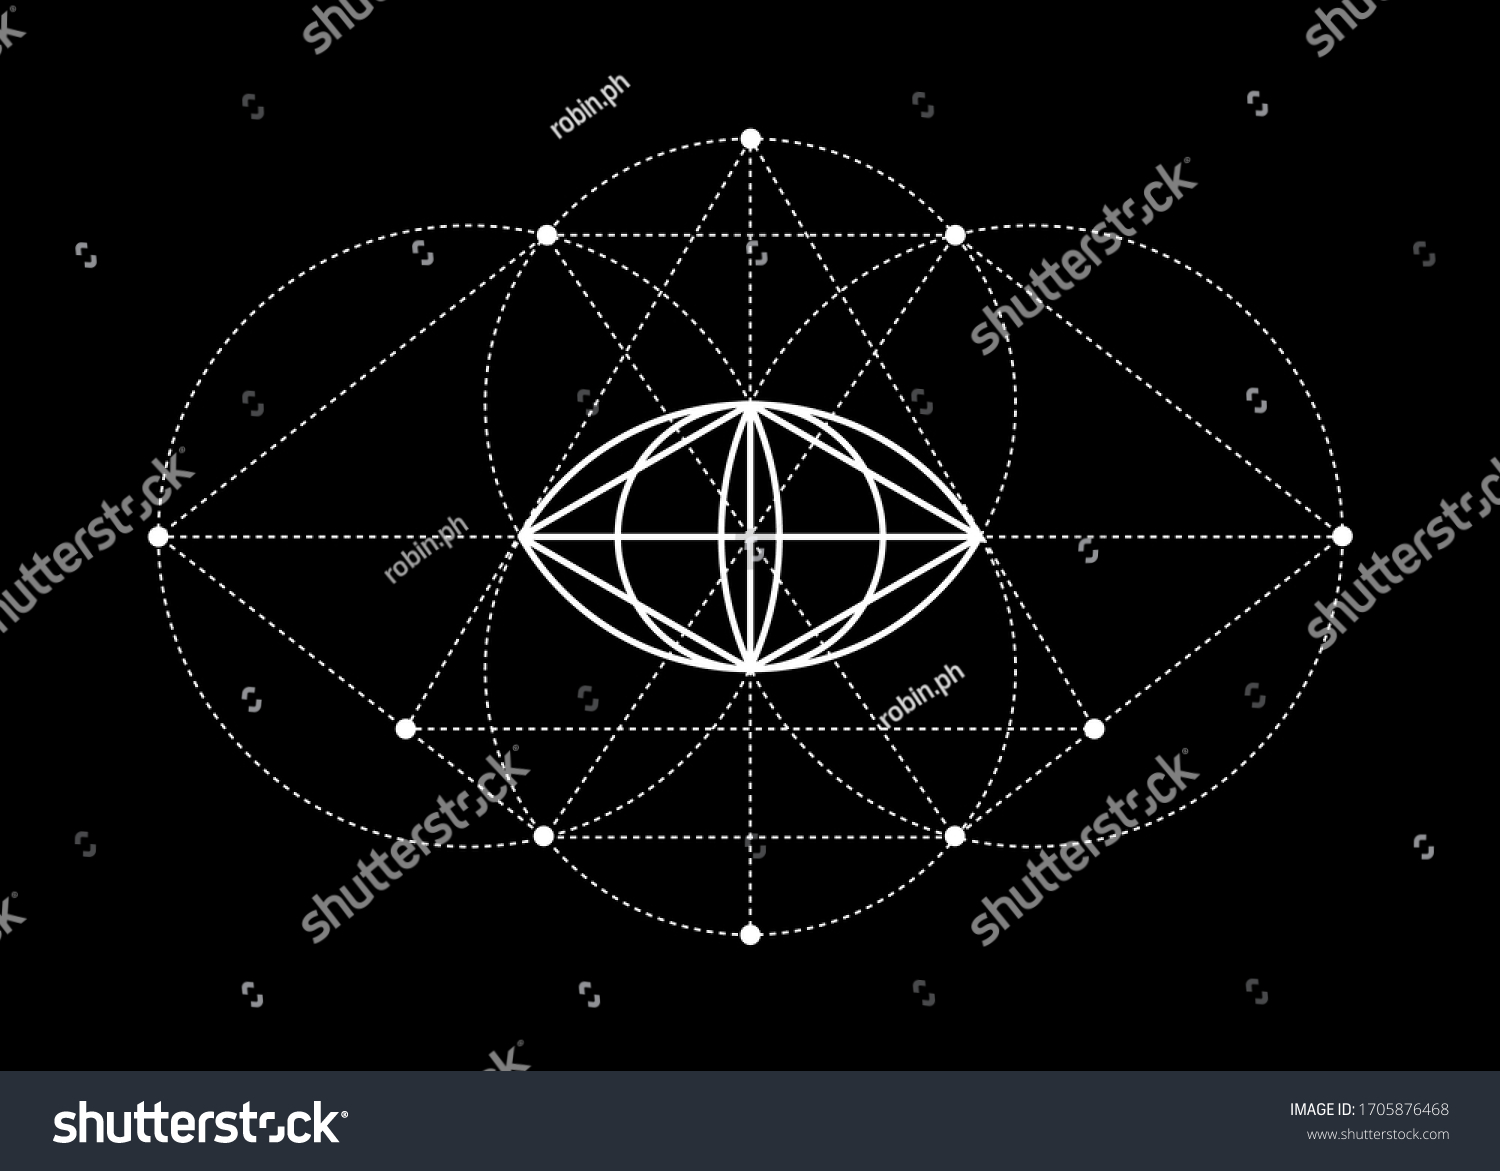 Vesica Piscis Sacred Geometry All Seeing เวกเตอร์สต็อก (ปลอดค่า